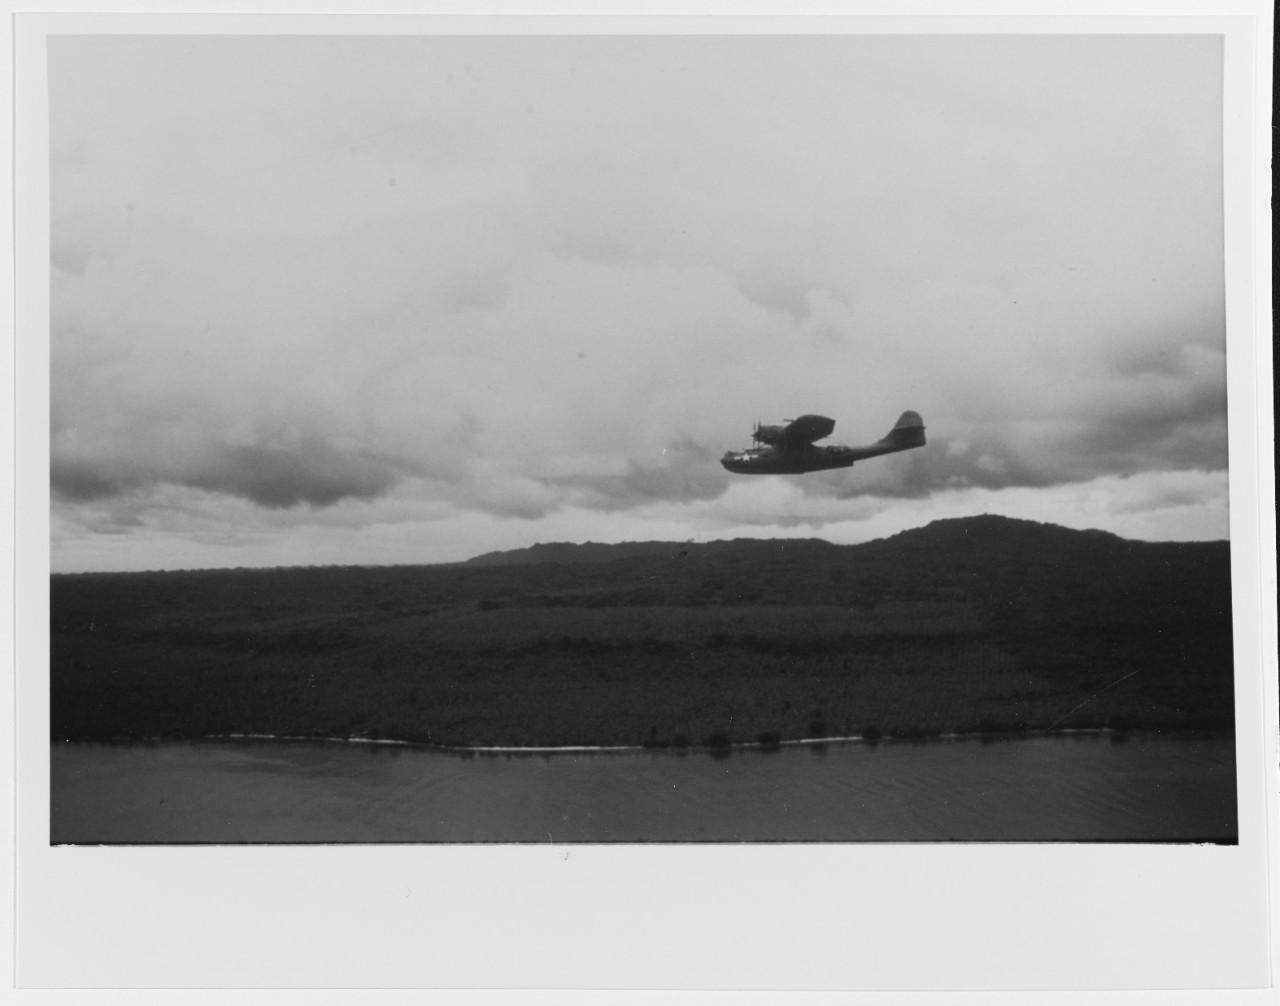 Consolidated PBY "Catalina" patrol bomber